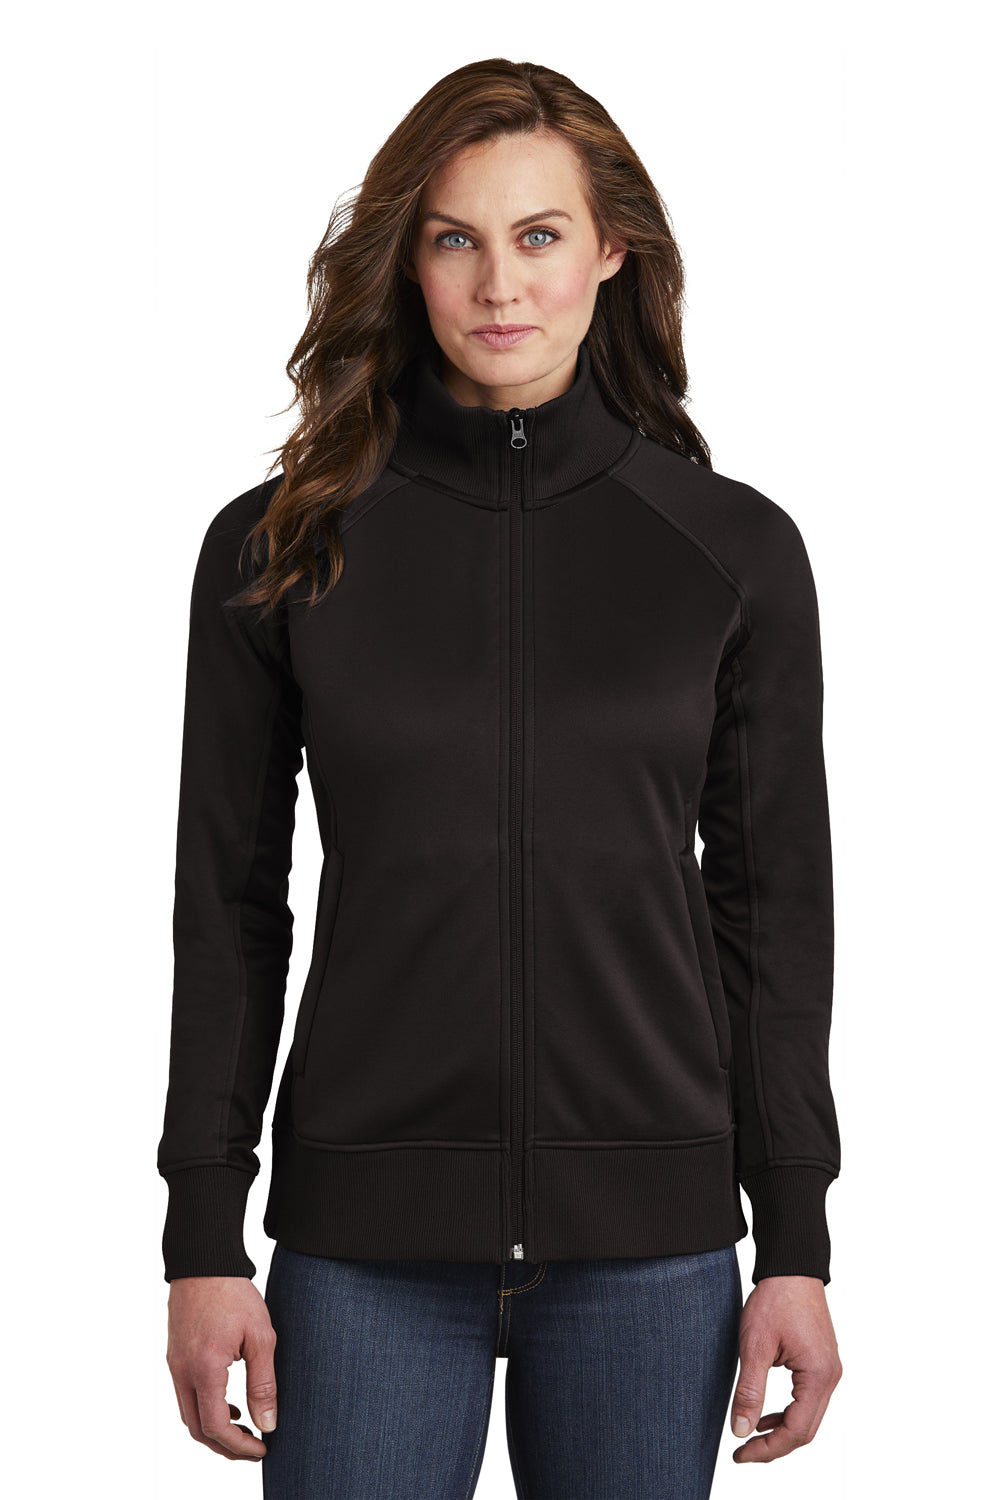 The North Face NF0A3SEV Womens Black Tech Full Zip Fleece Jacket